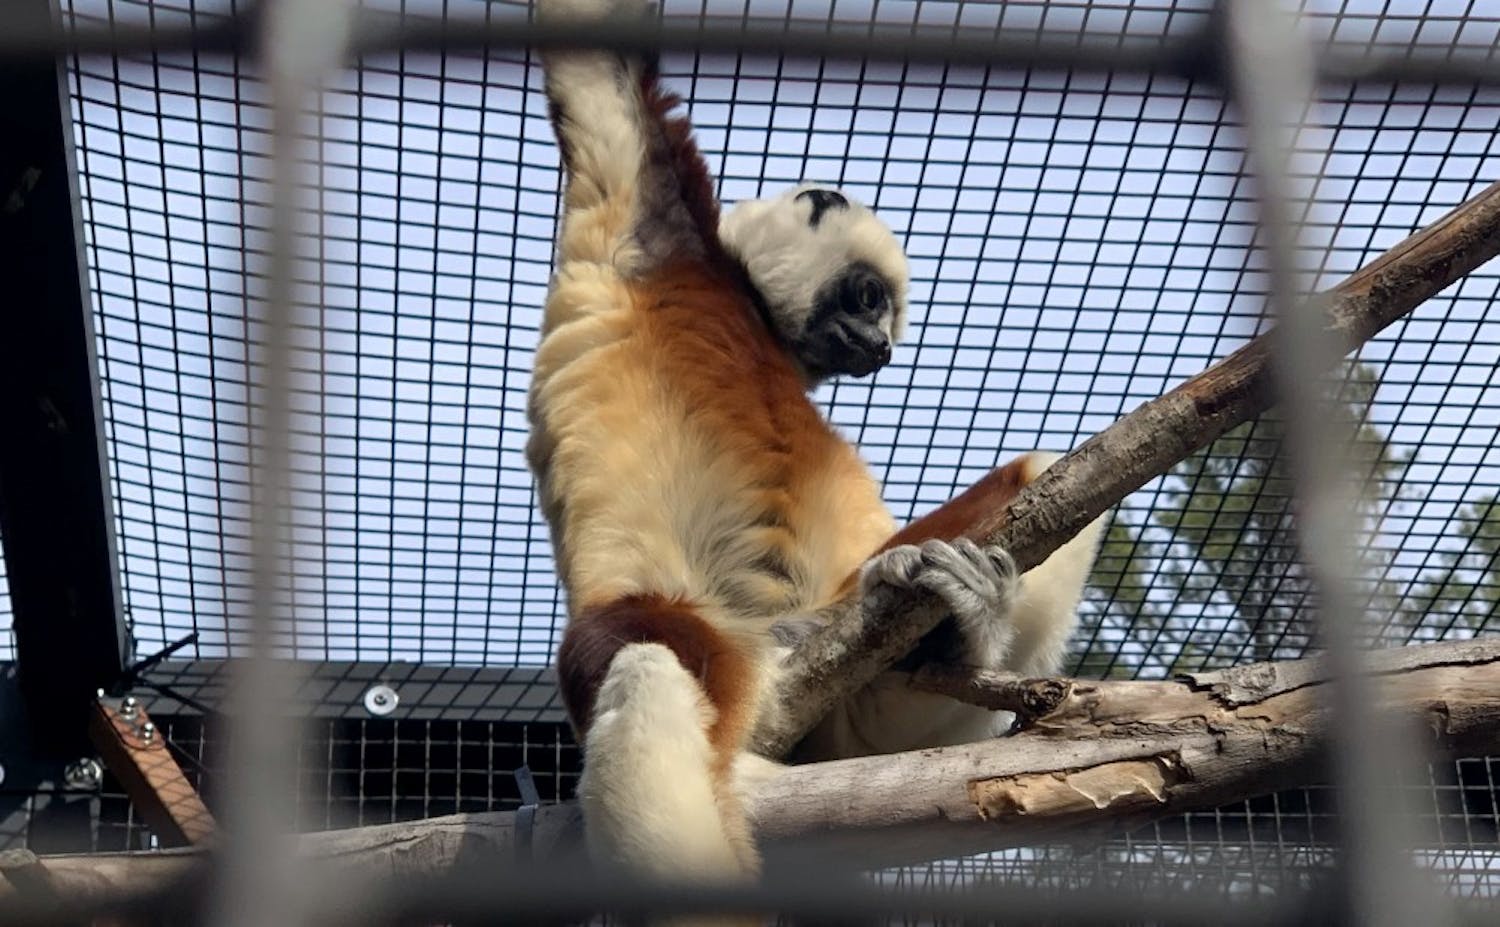 The Duke Lemur Center will open Friday after 14 months of closure.